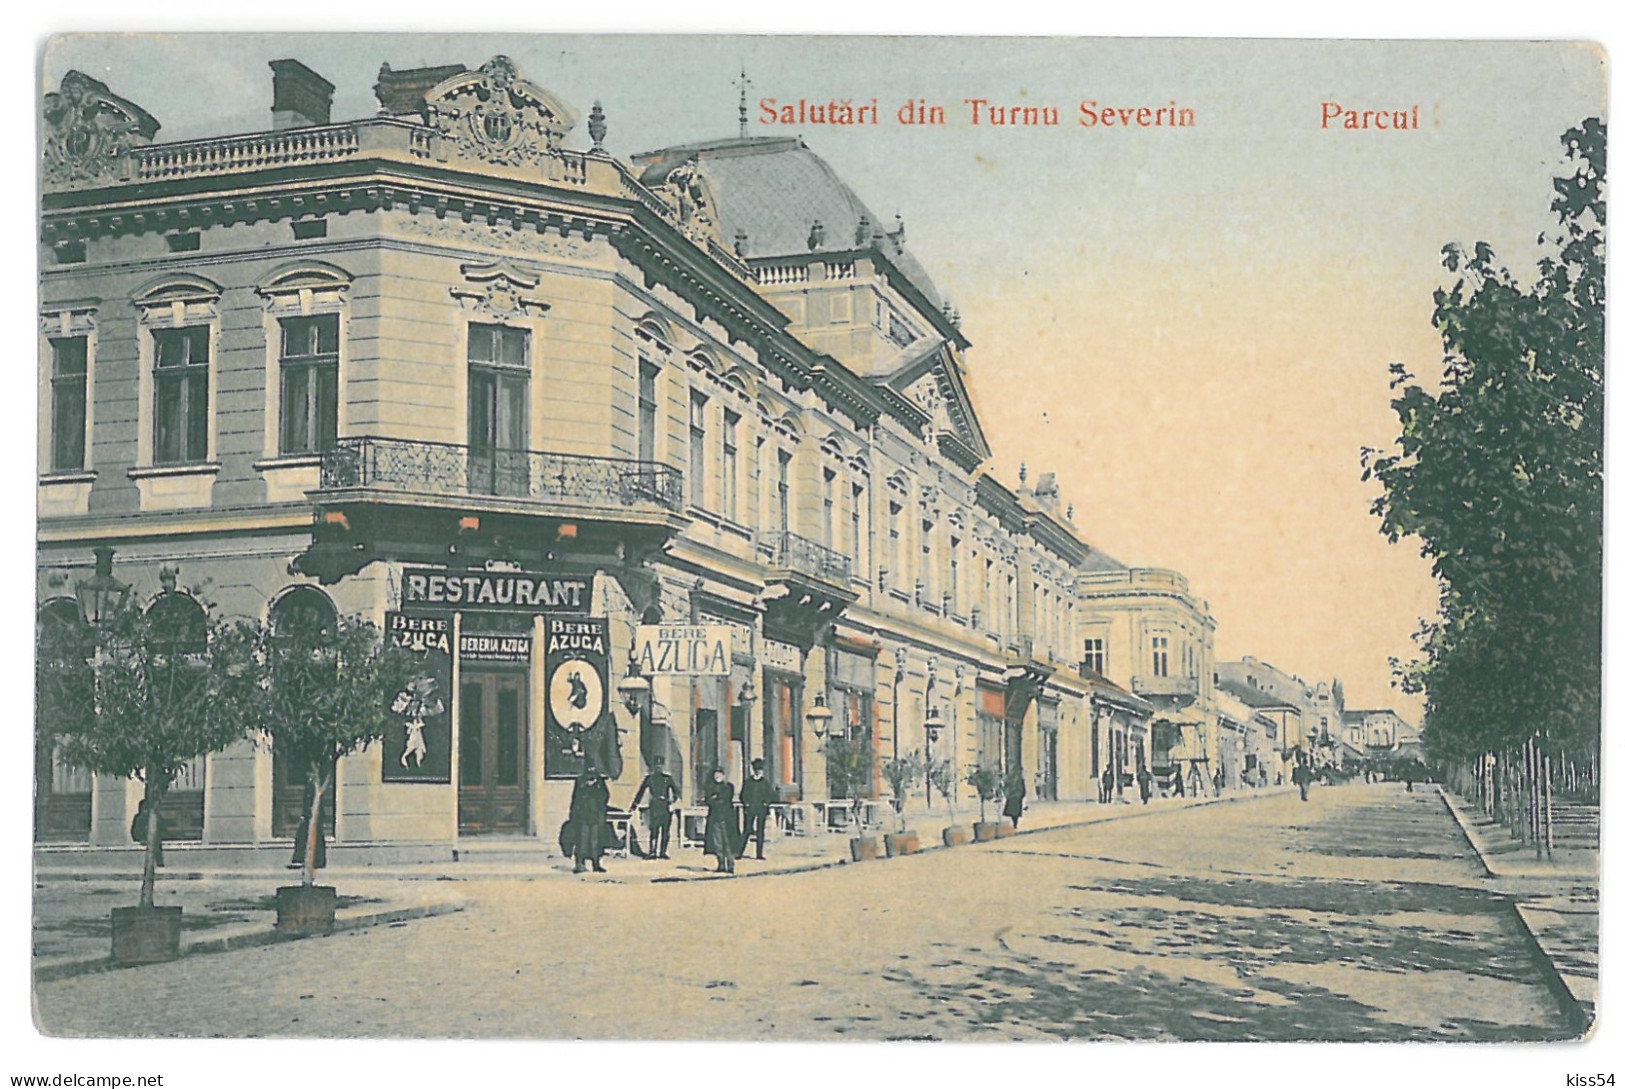 RO 77 - 15063 TURNU SEVERIN, Stores, Park, Romania - Old Postcard - Unused - Romania